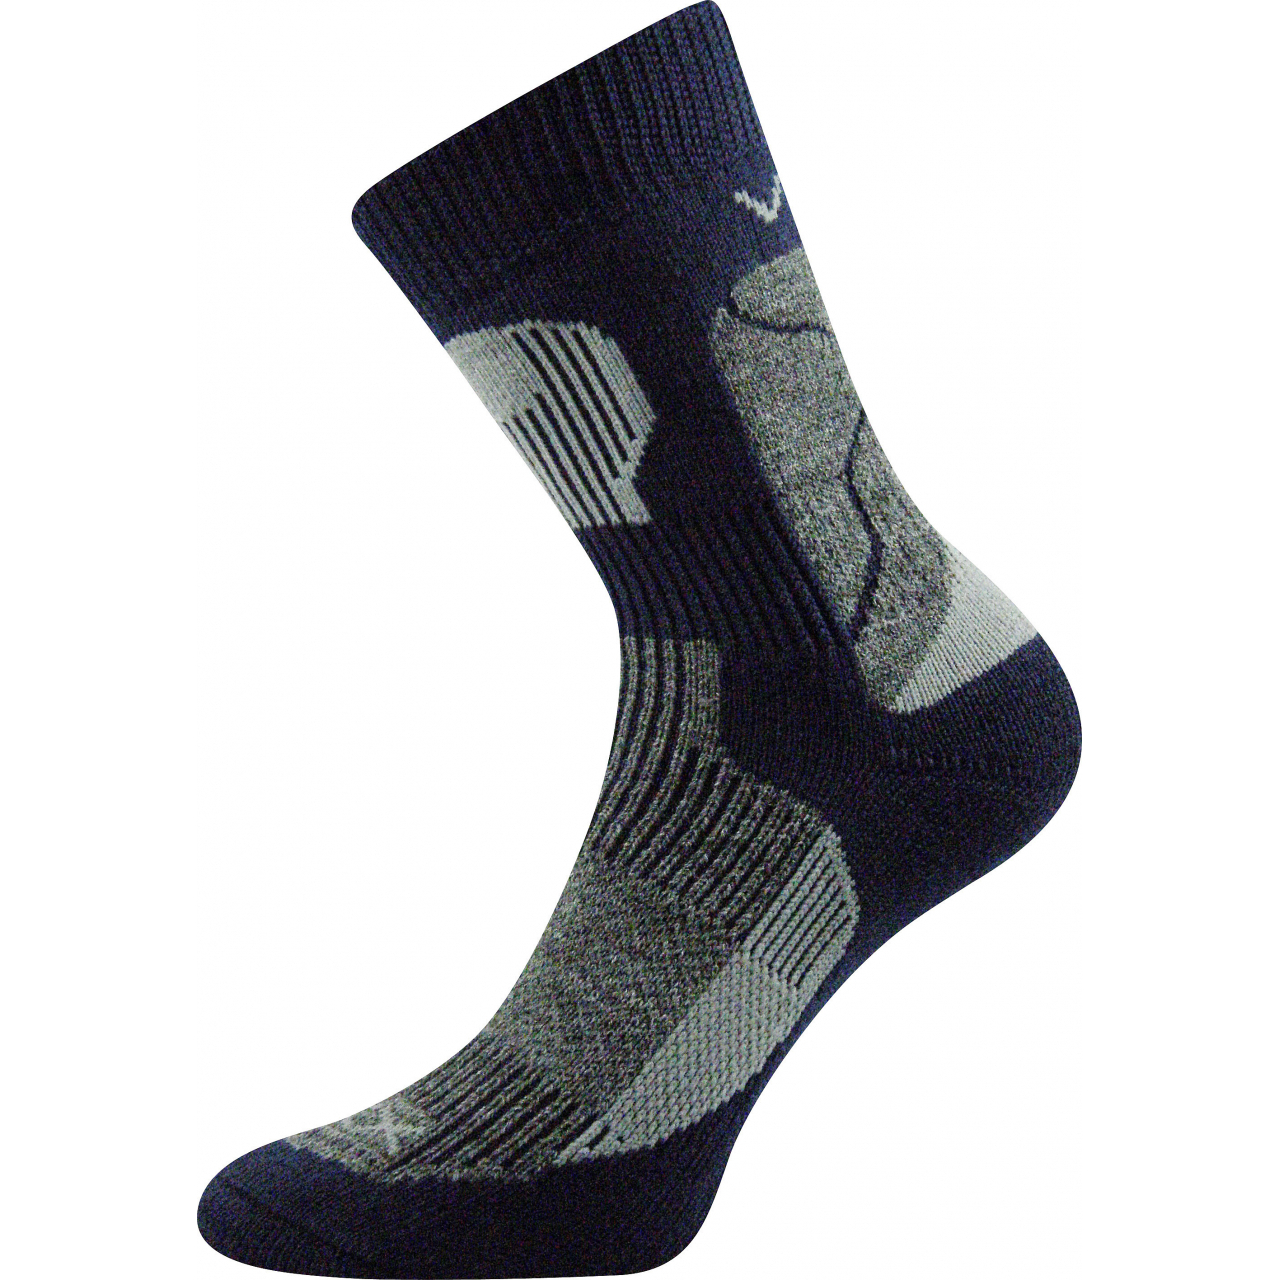 Ponožky unisex termo Voxx Treking - tmavě modré-šedé, 38-39